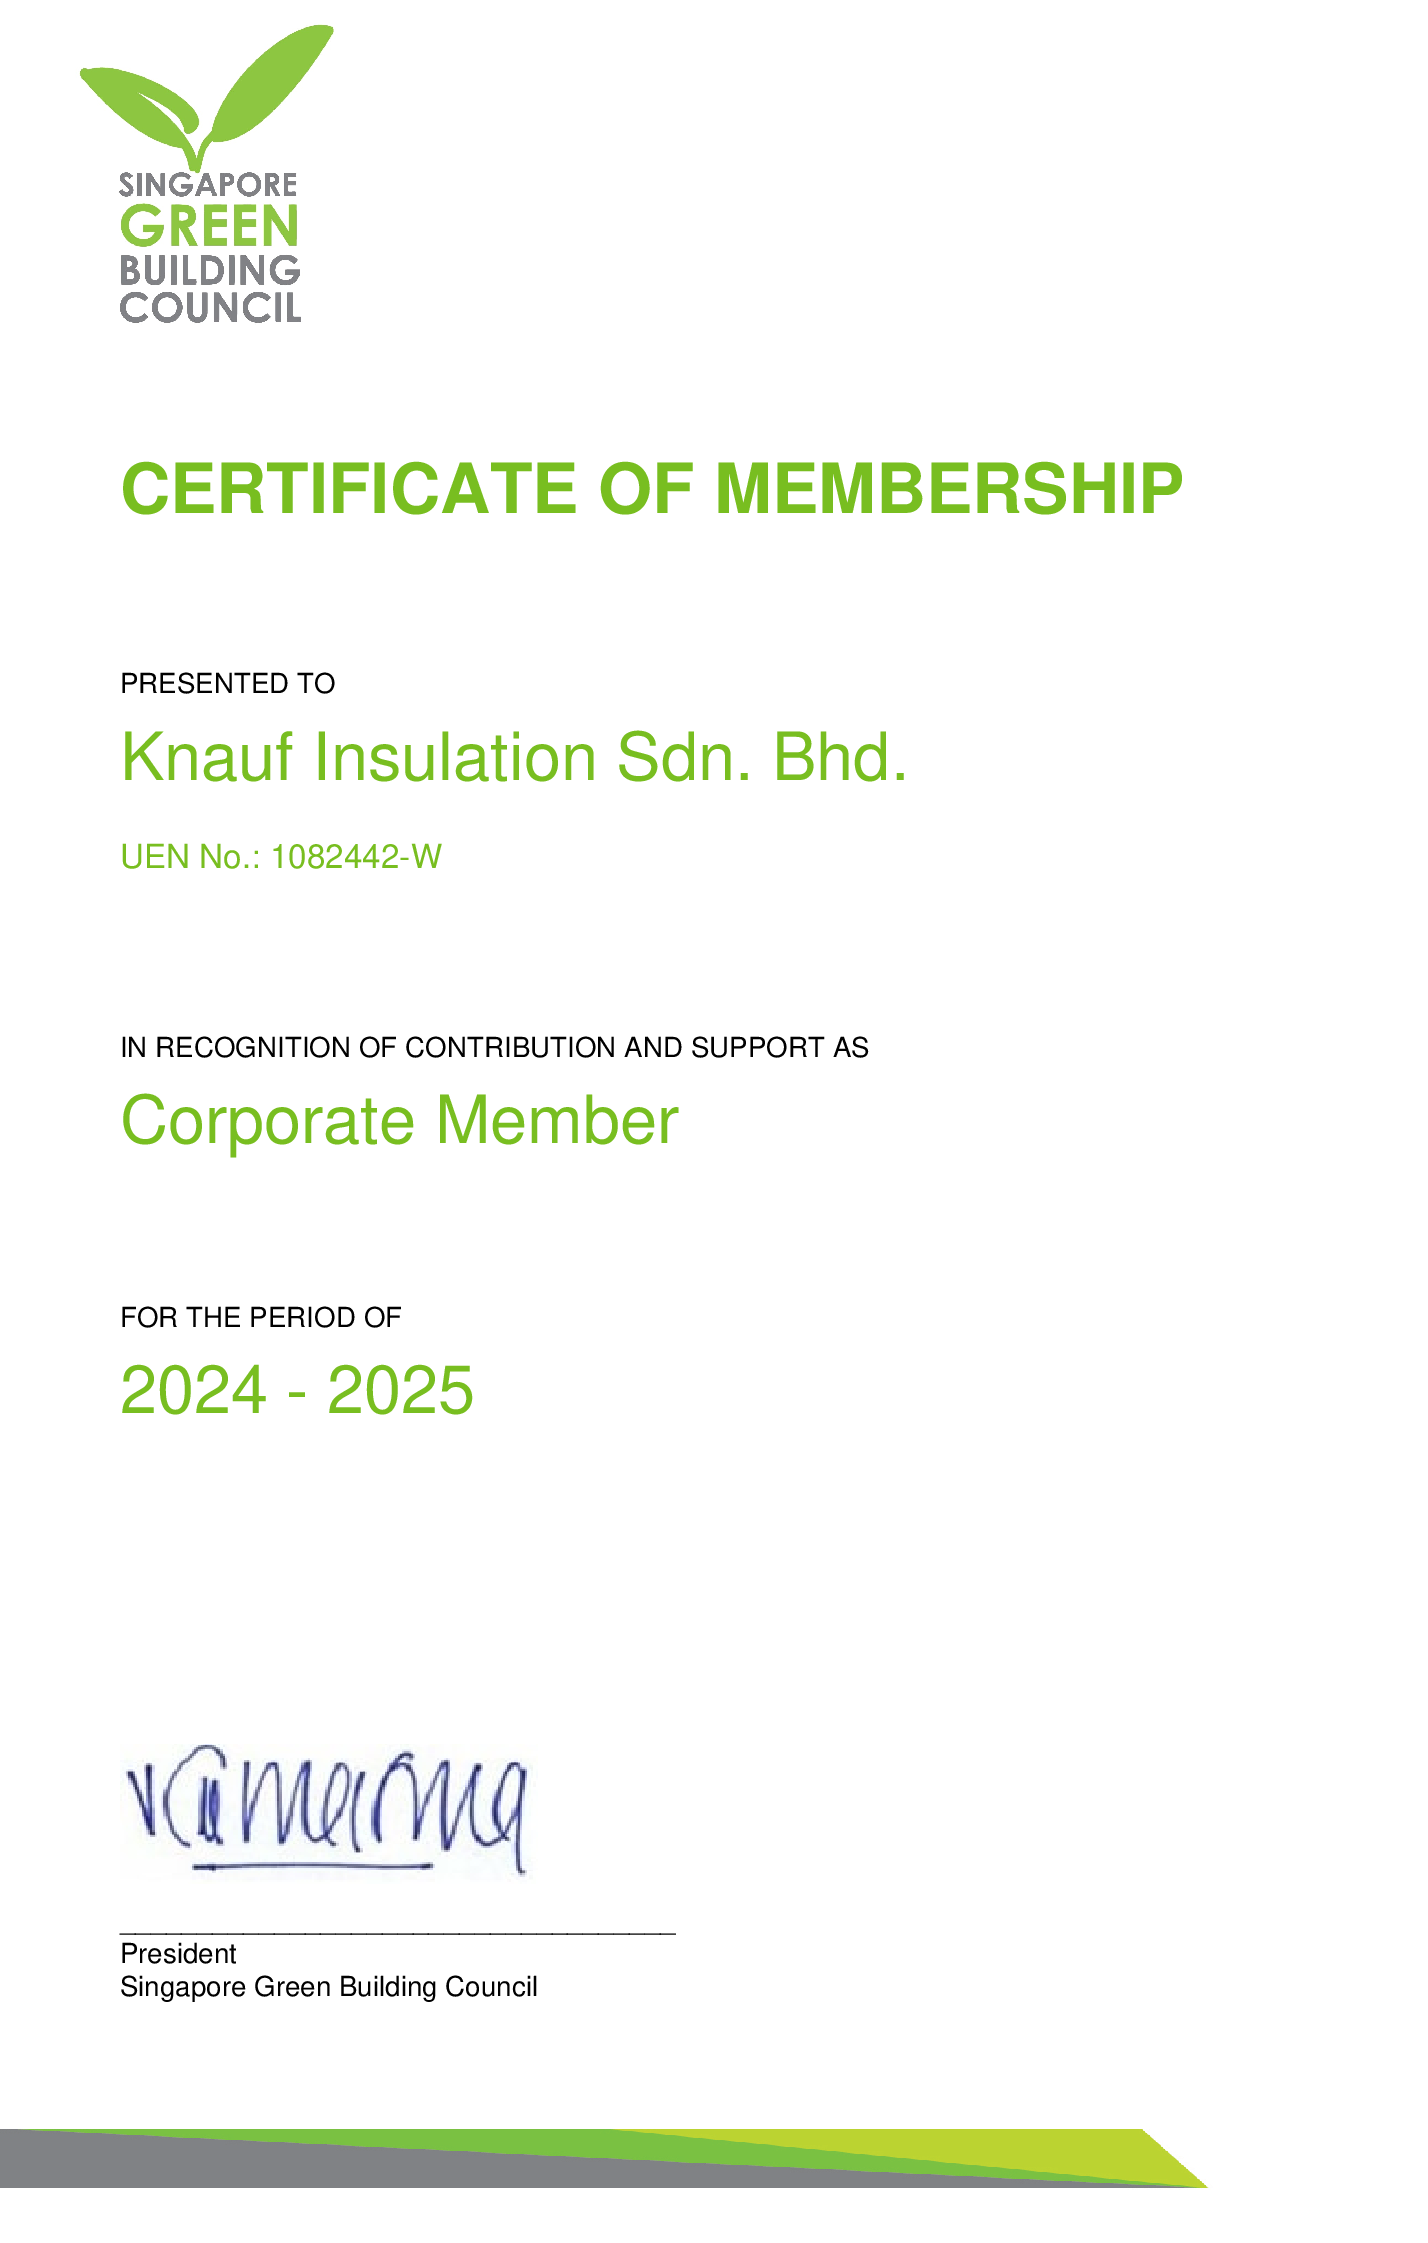 Singapore Green Building Council - Certificate of Membership